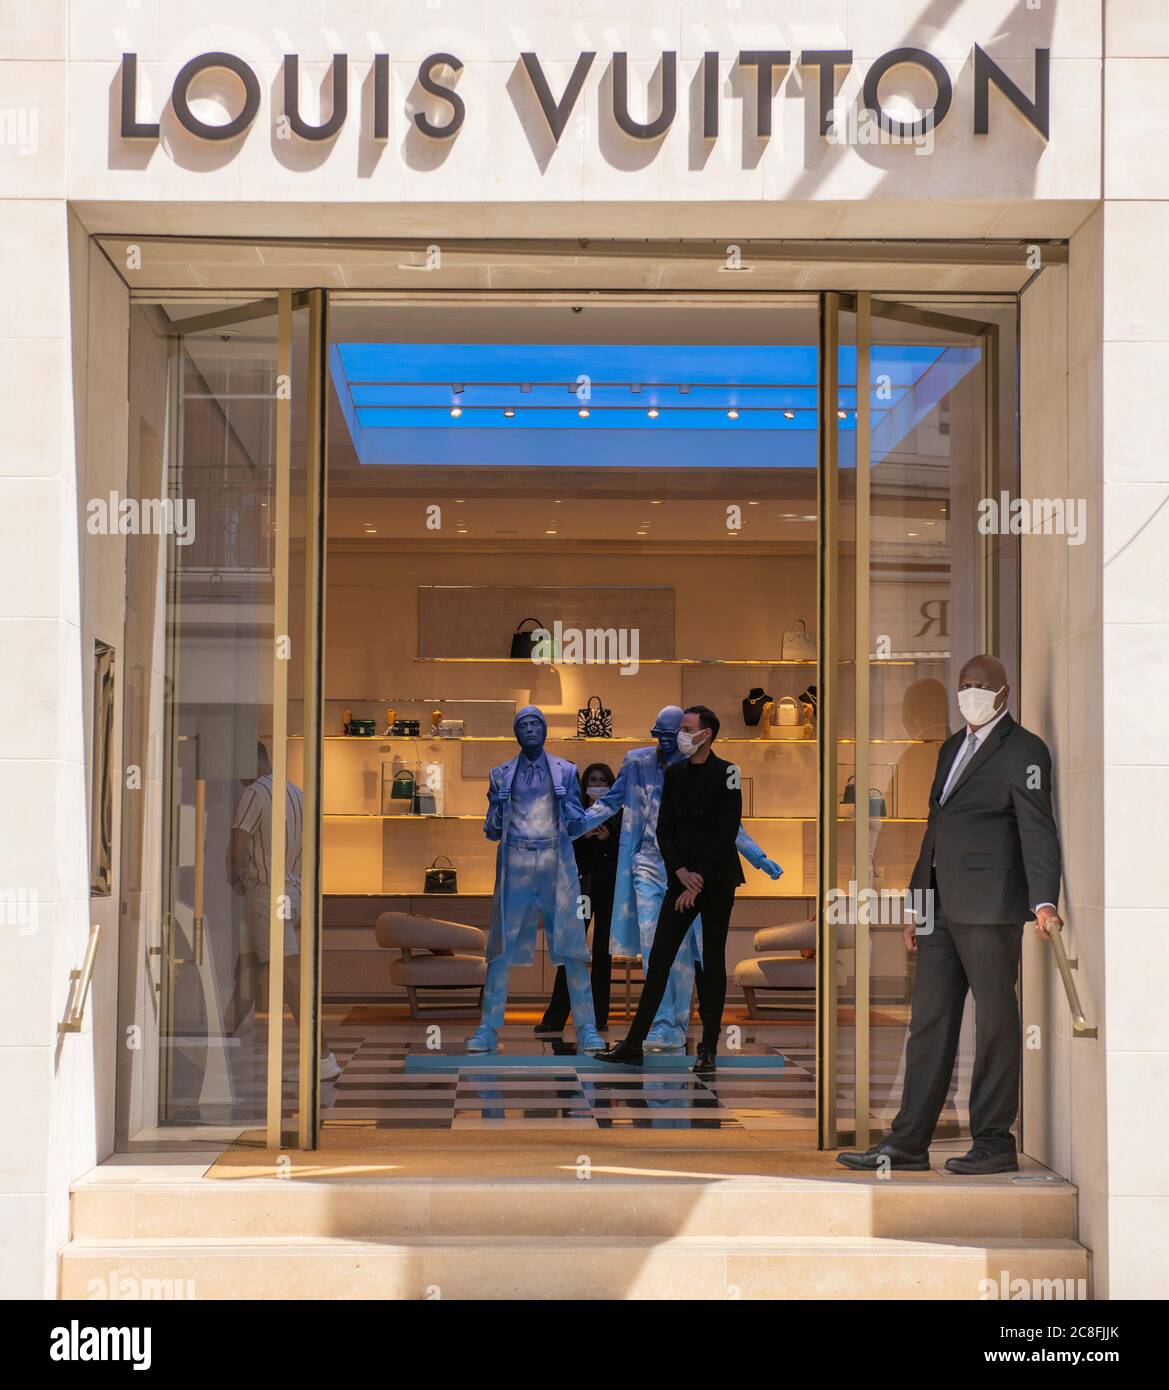 43 Louis Vuitton Flagship Store In London Stock Photos, High-Res